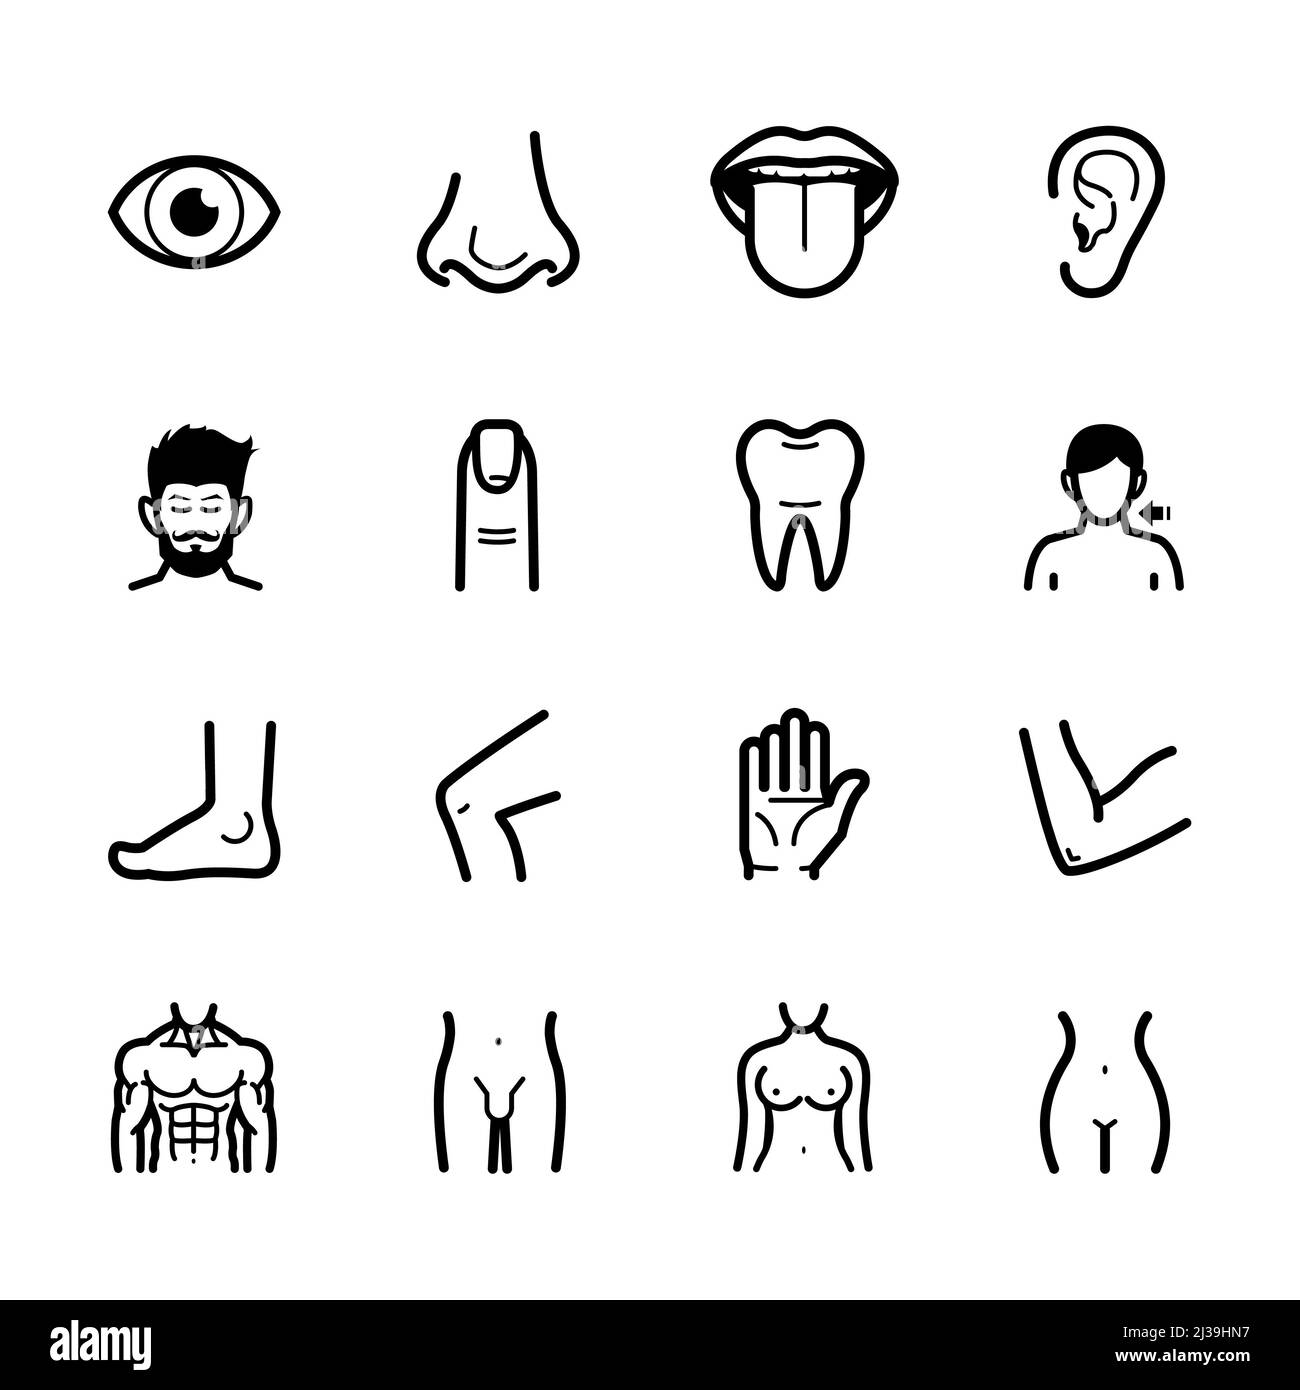 Human Anatomy icons with White Background Stock Photo